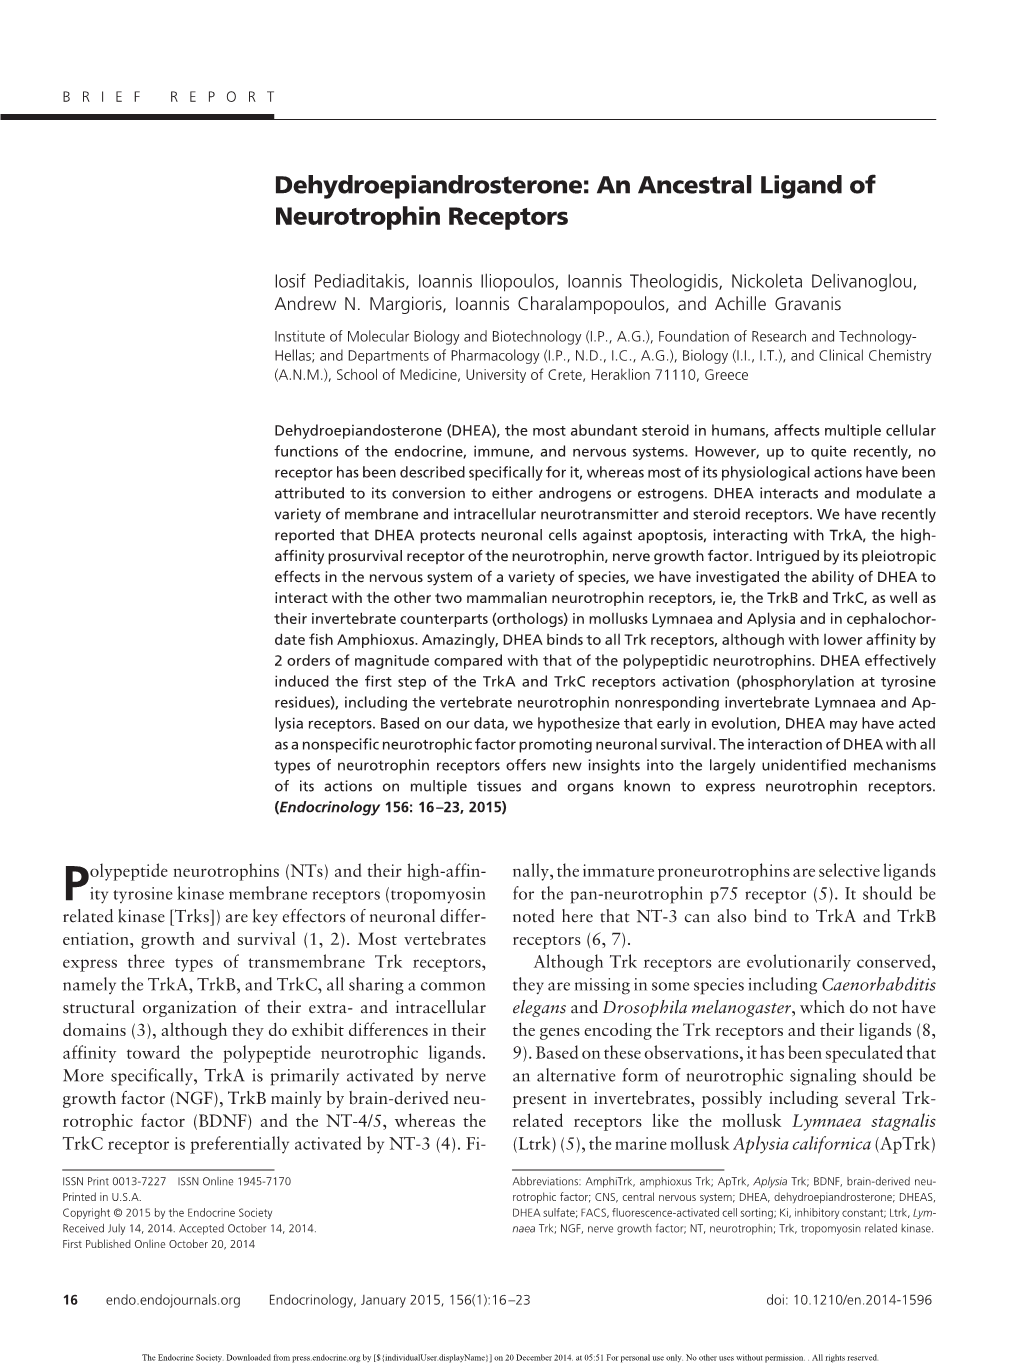 Dehydroepiandrosterone: an Ancestral Ligand of Neurotrophin Receptors